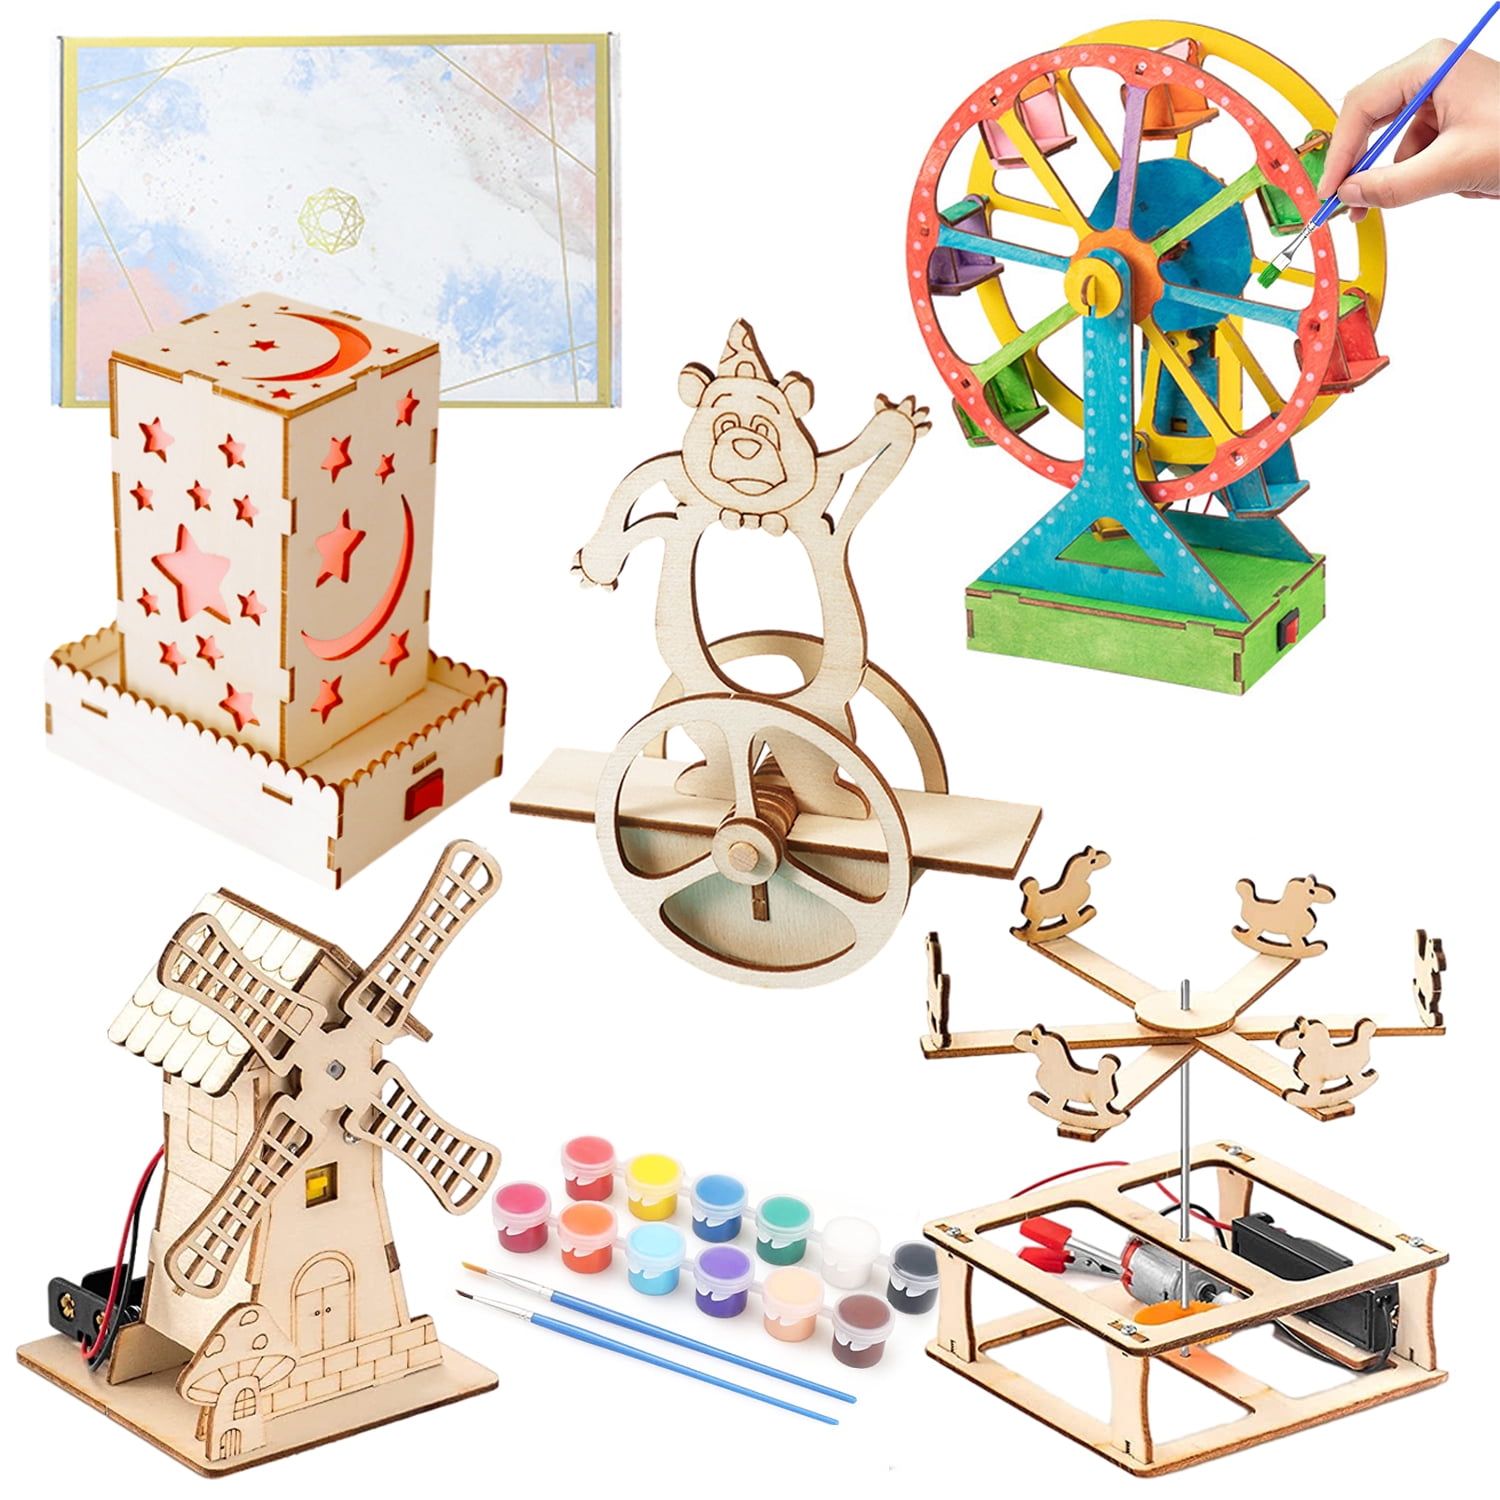 STEM Science Kits, 5 Set Building Kits for Kids Ages 8-12, 3D Wooden  Puzzles